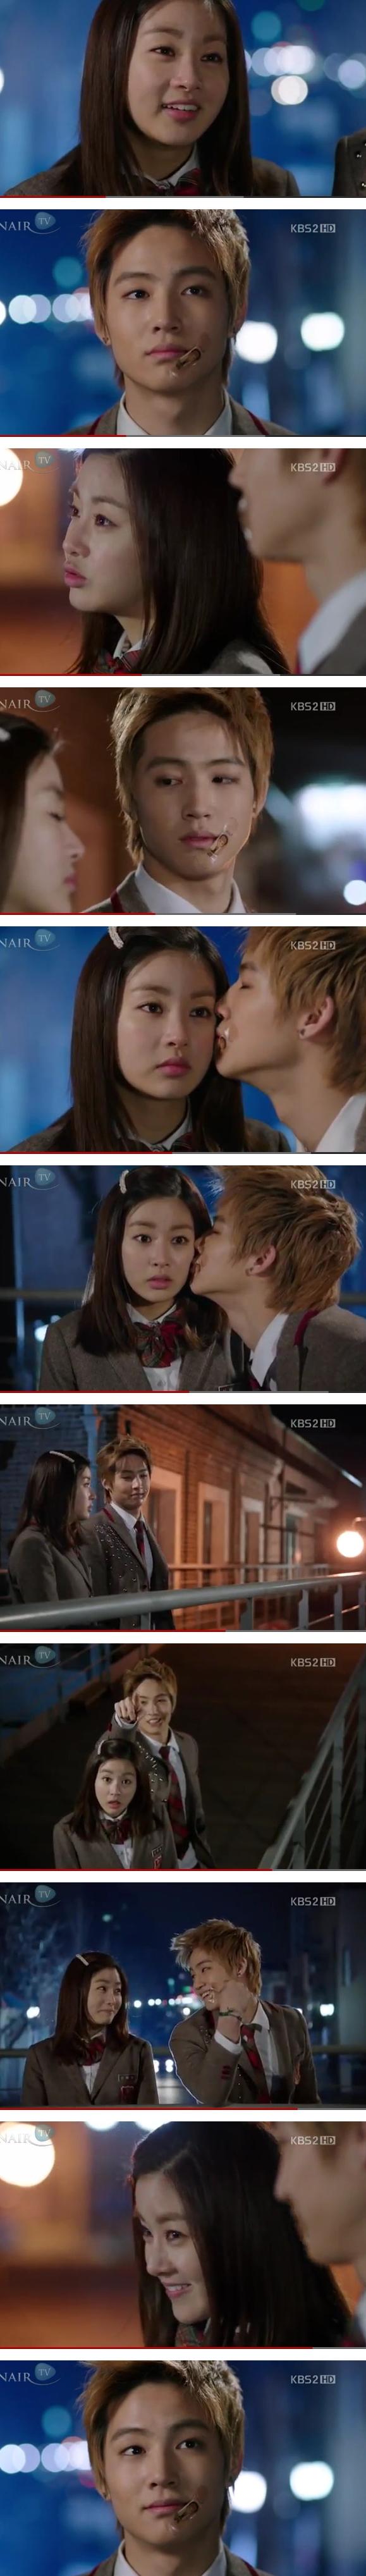 episode 12 captures for the Korean drama 'Dream High 2'